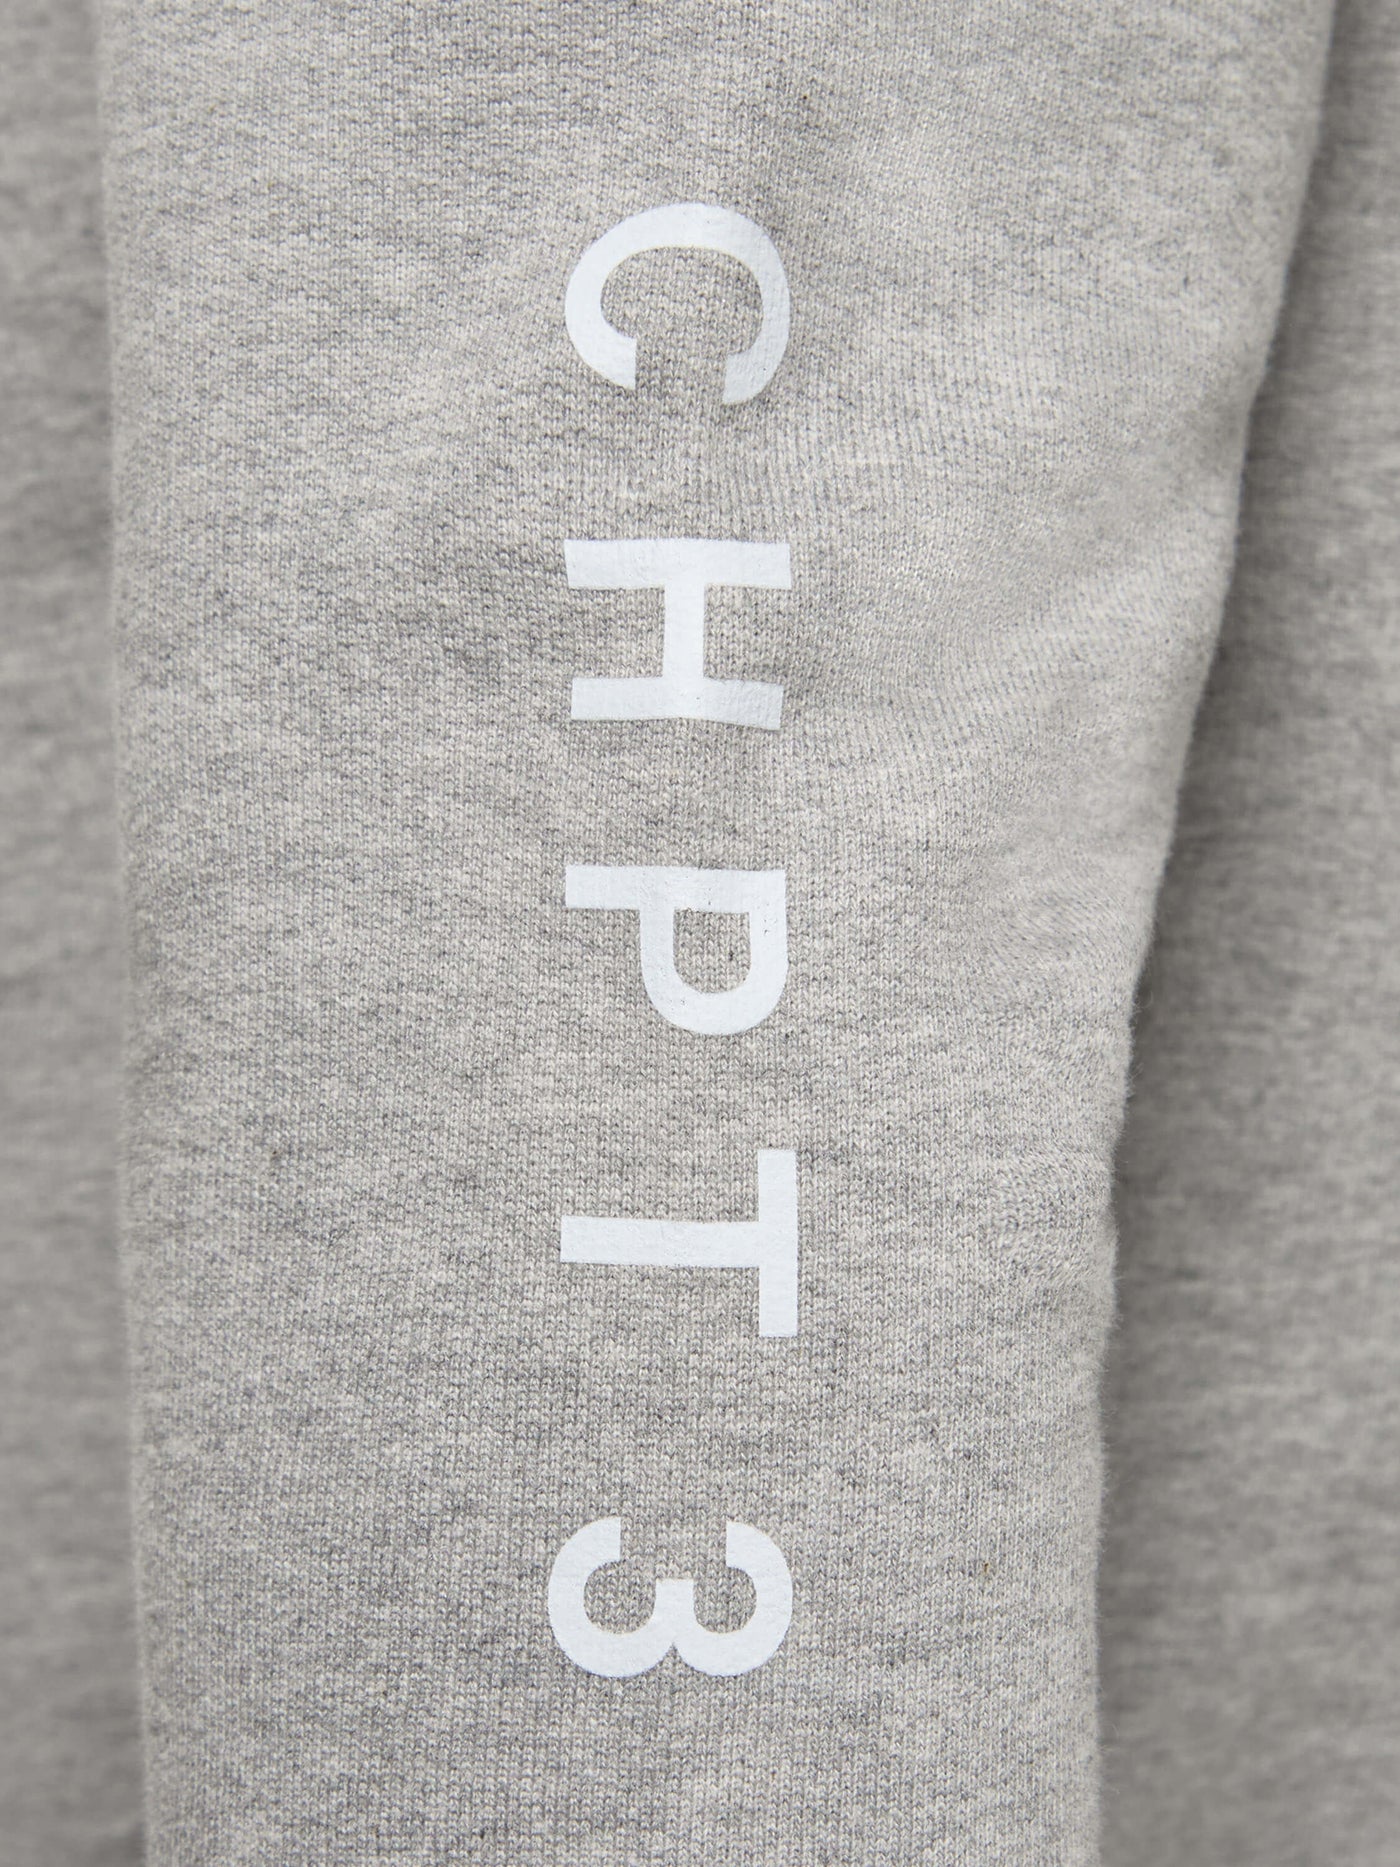 CHPT3 Elysée mens cotton sweatshirt in grey, close-up of sleeve print #color_grey-marl